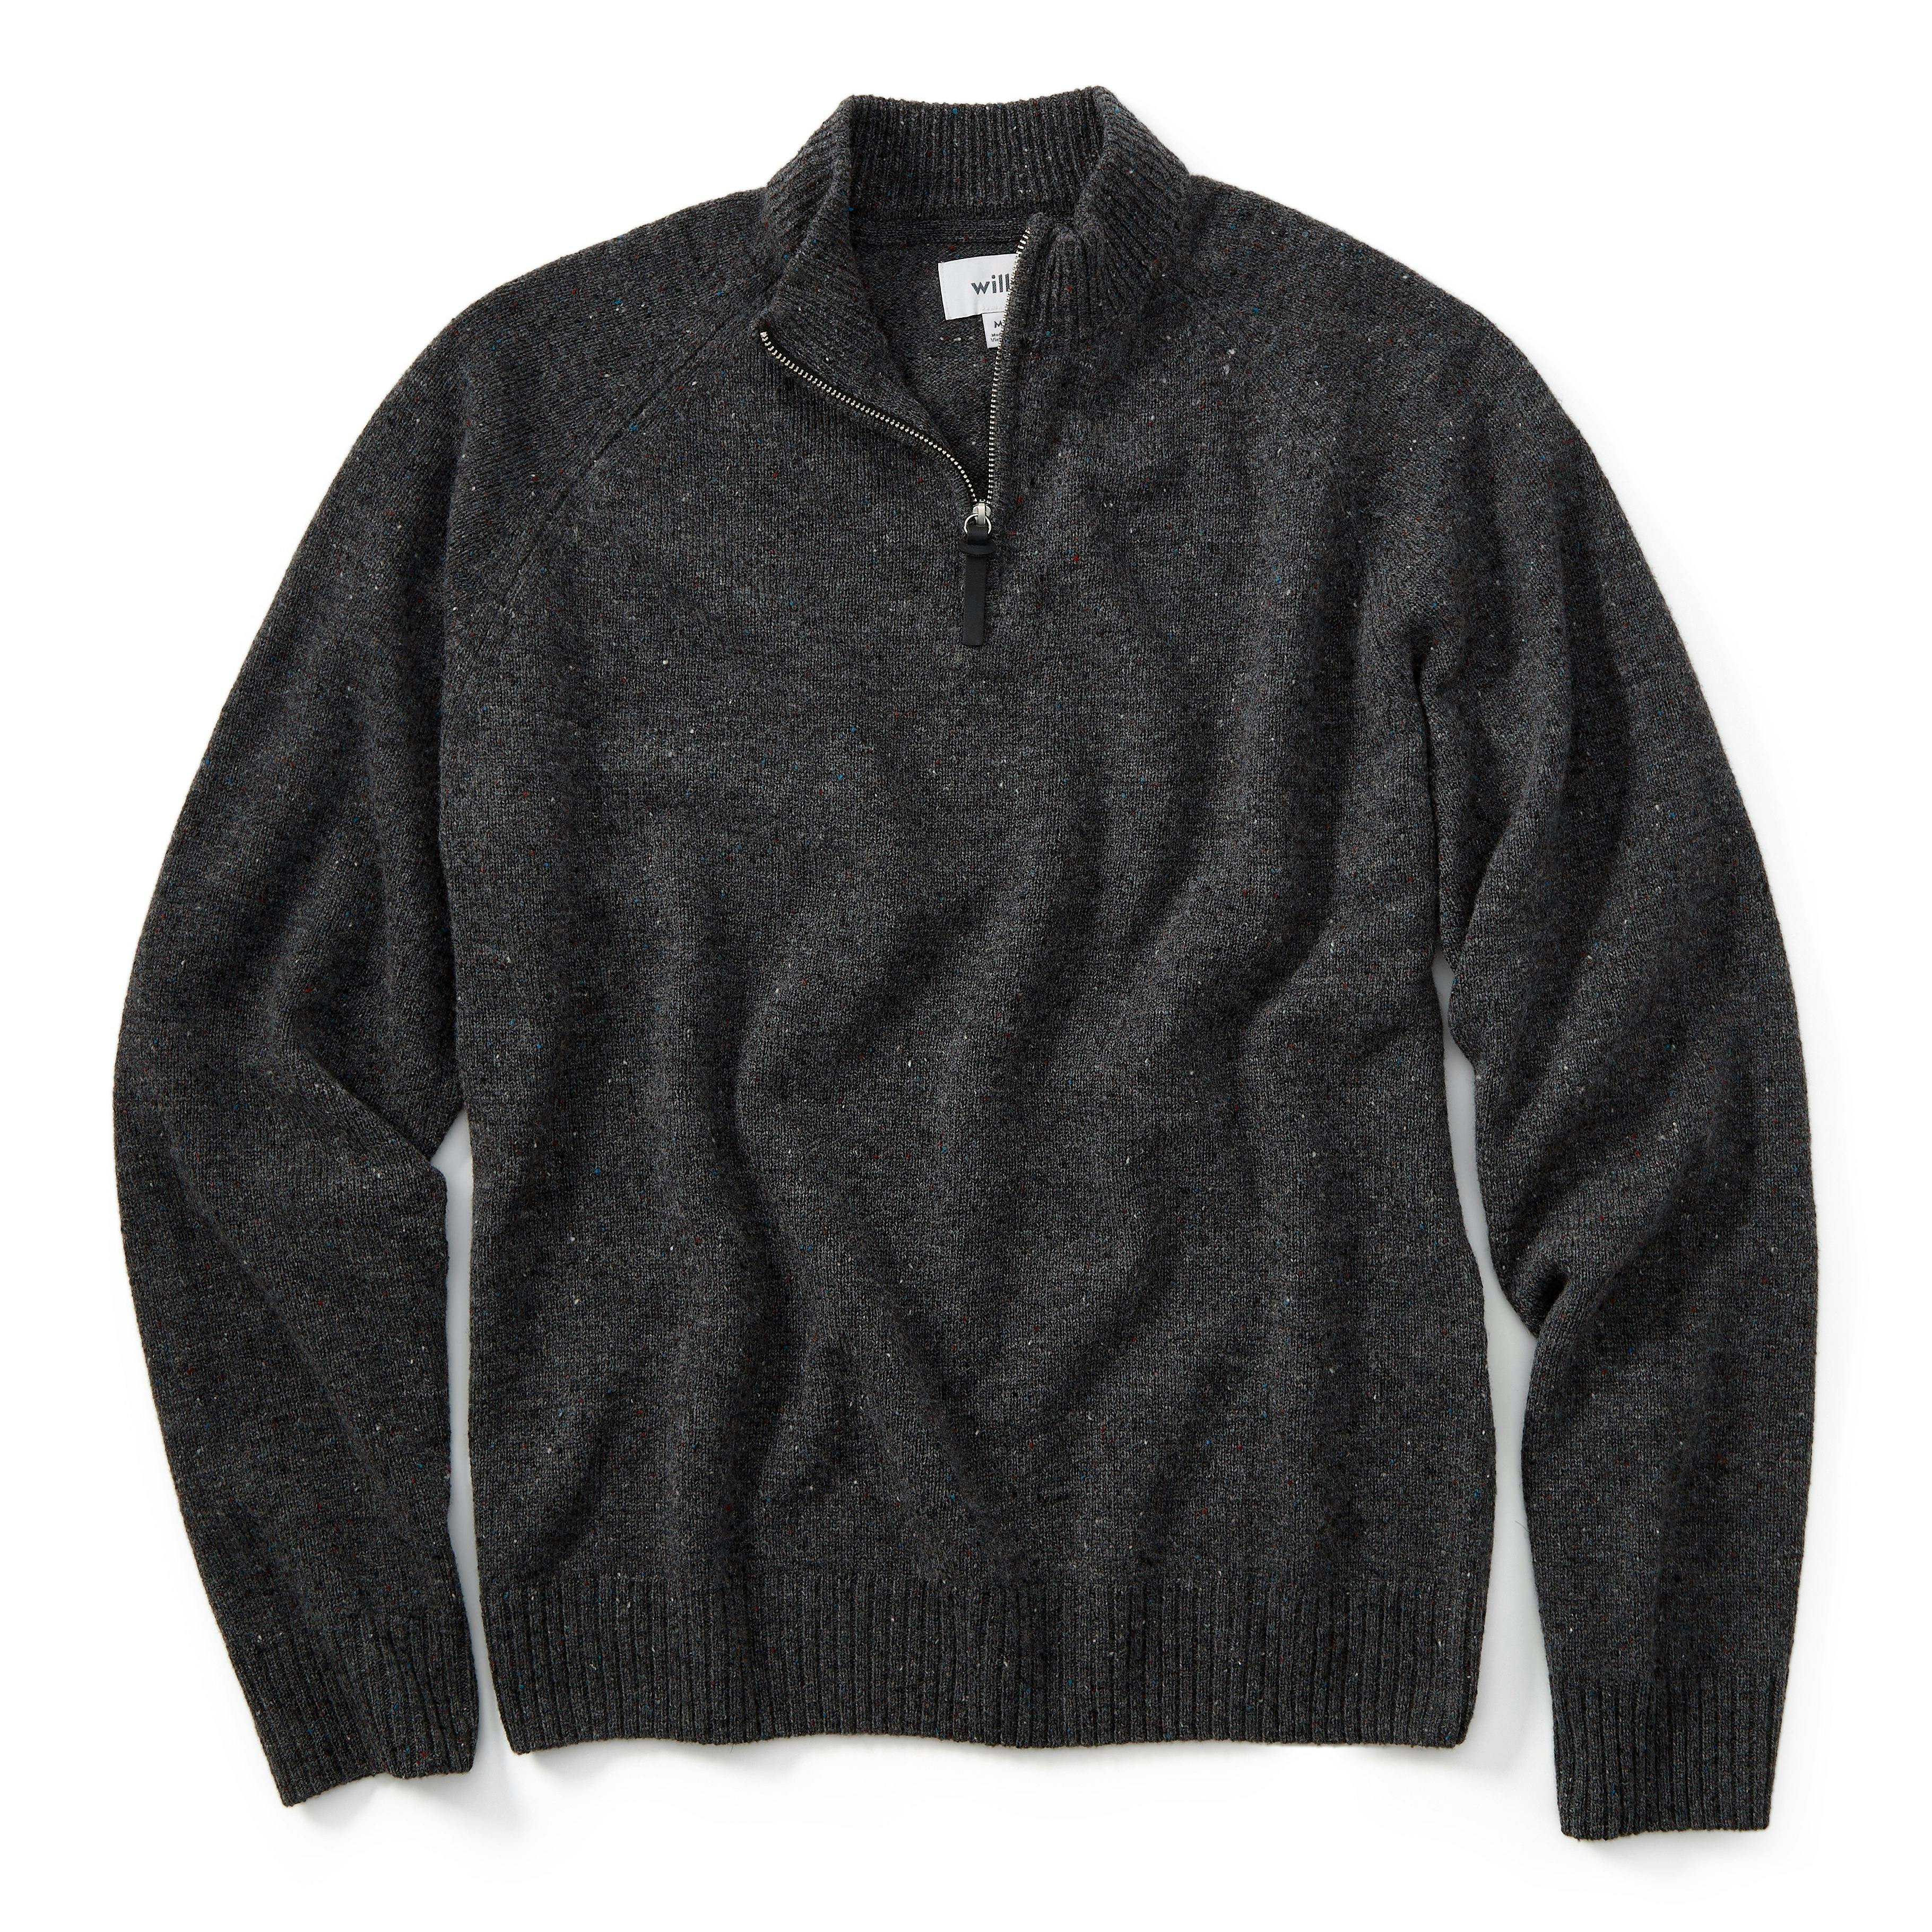 Speckled Merino Wool Quarter Zip Sweater